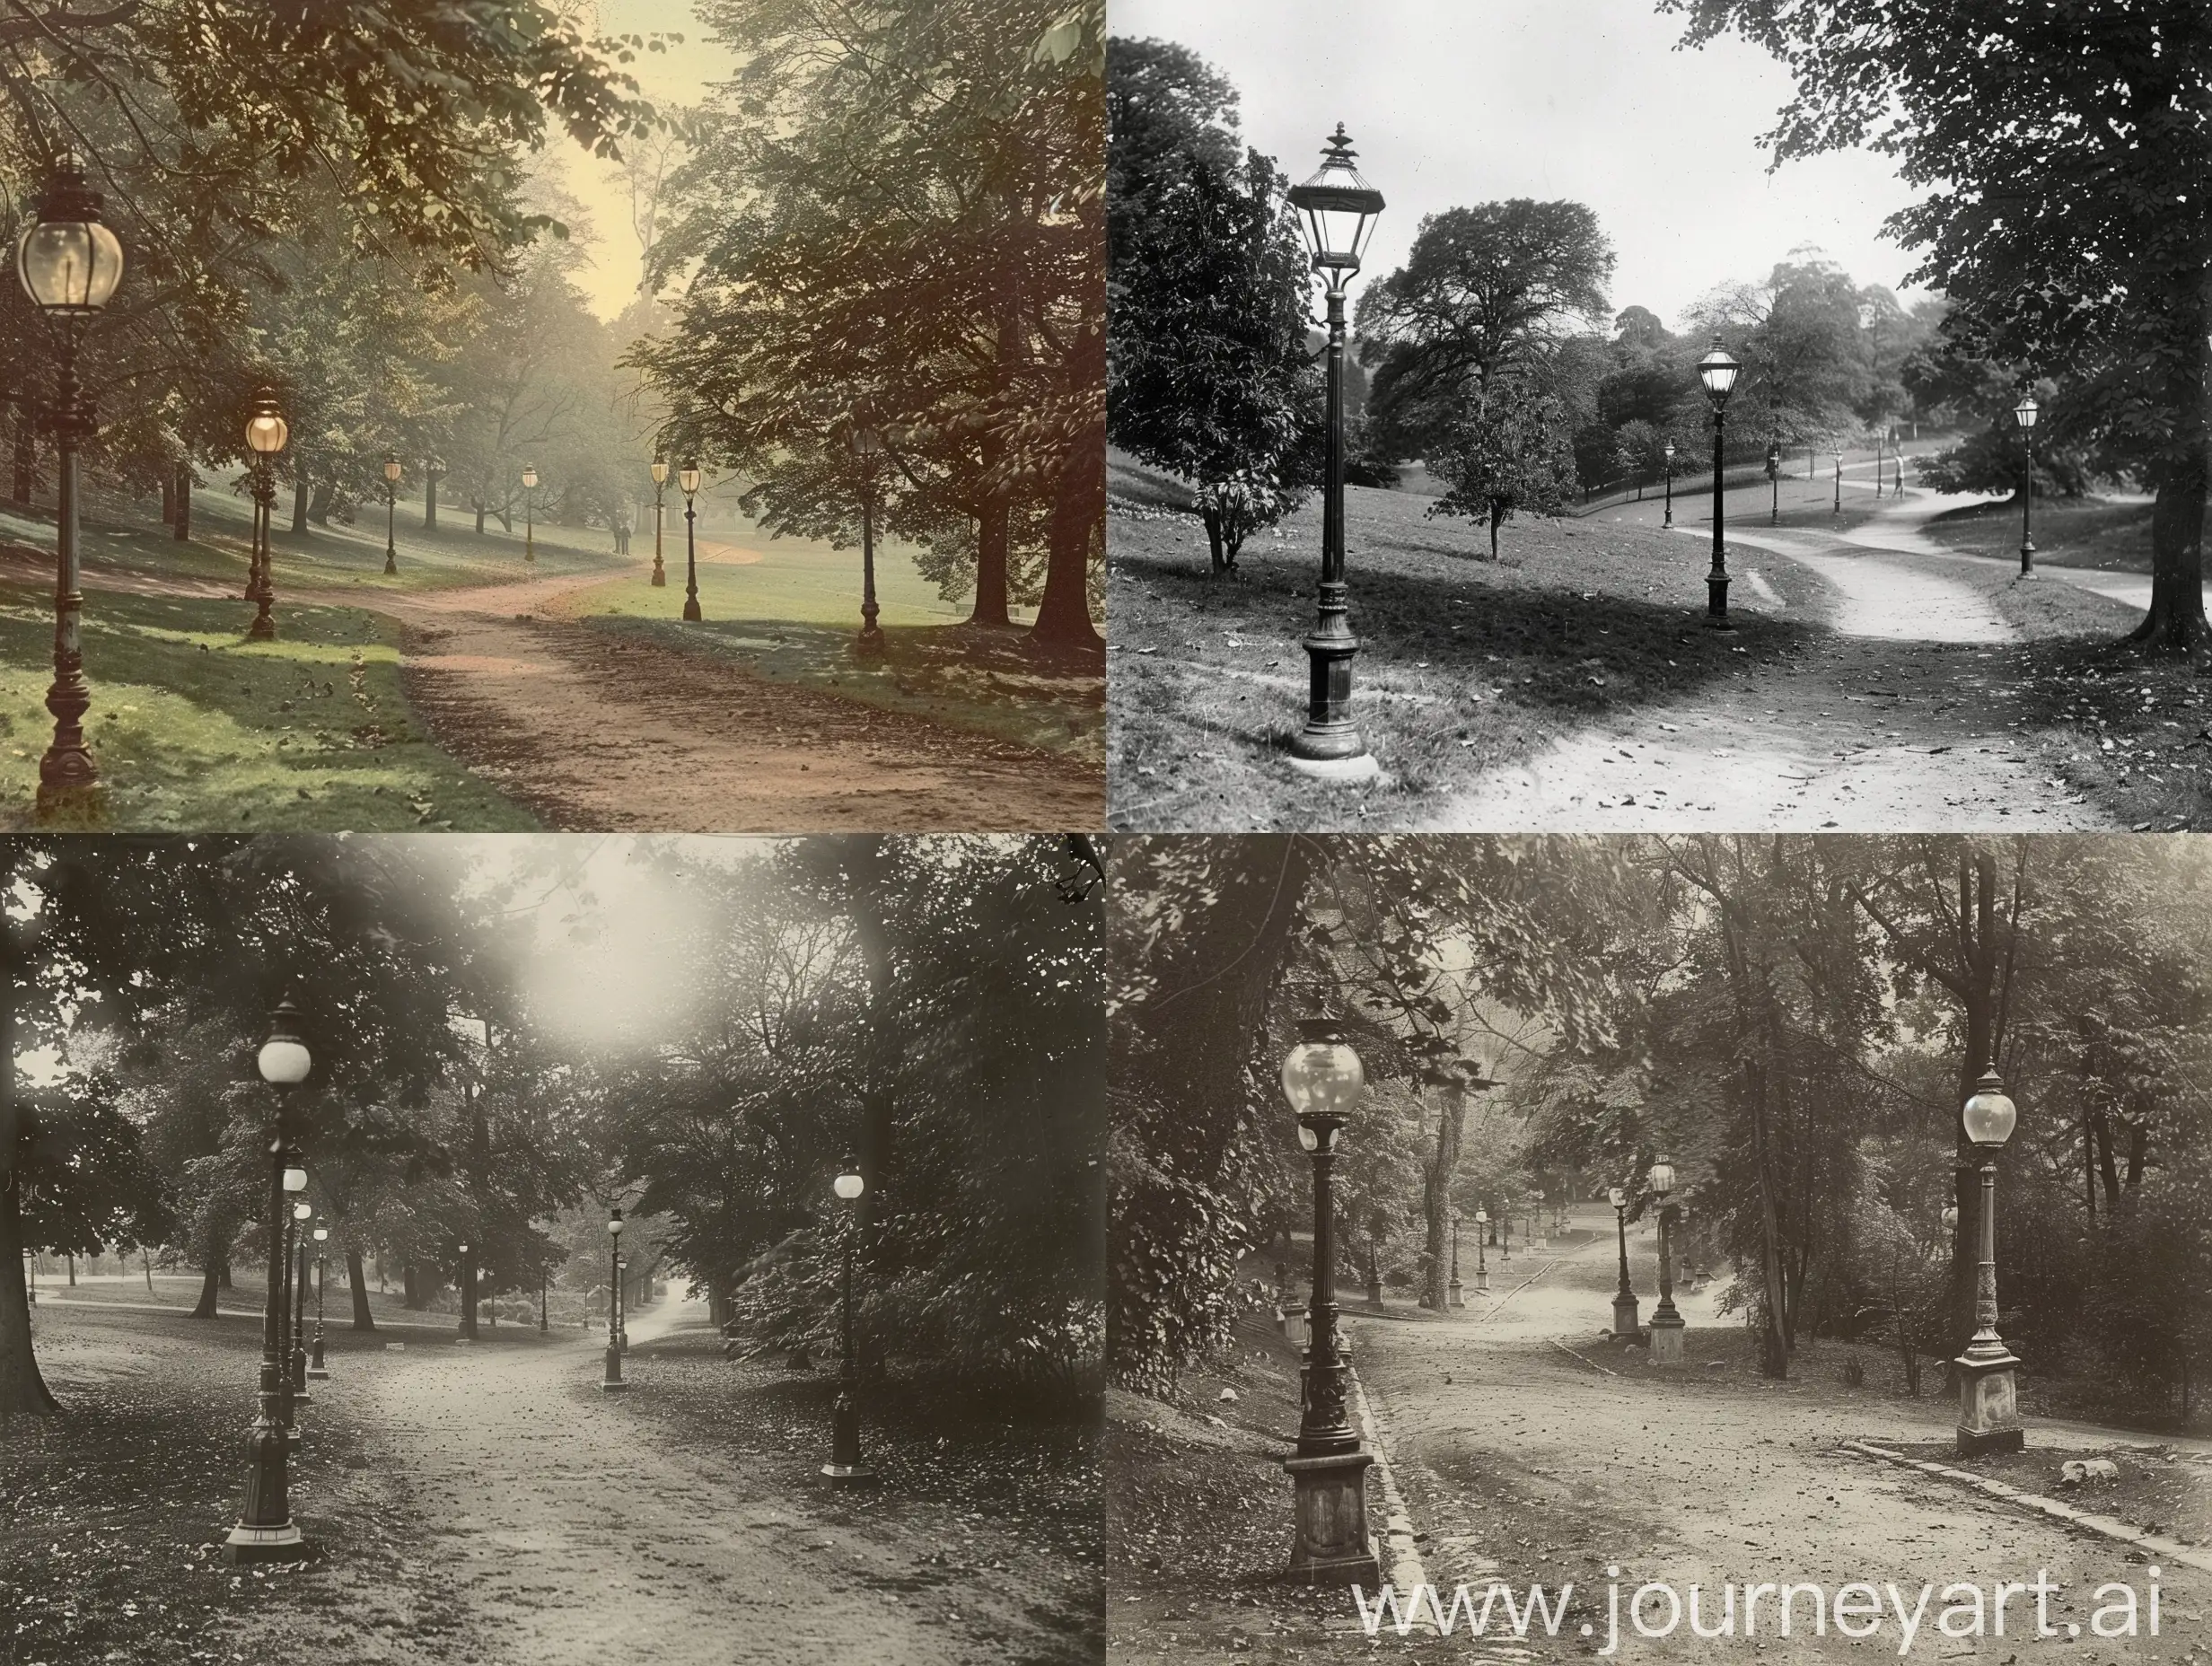 Idyllic-19th-Century-English-Park-Scene-with-Lamp-Posts